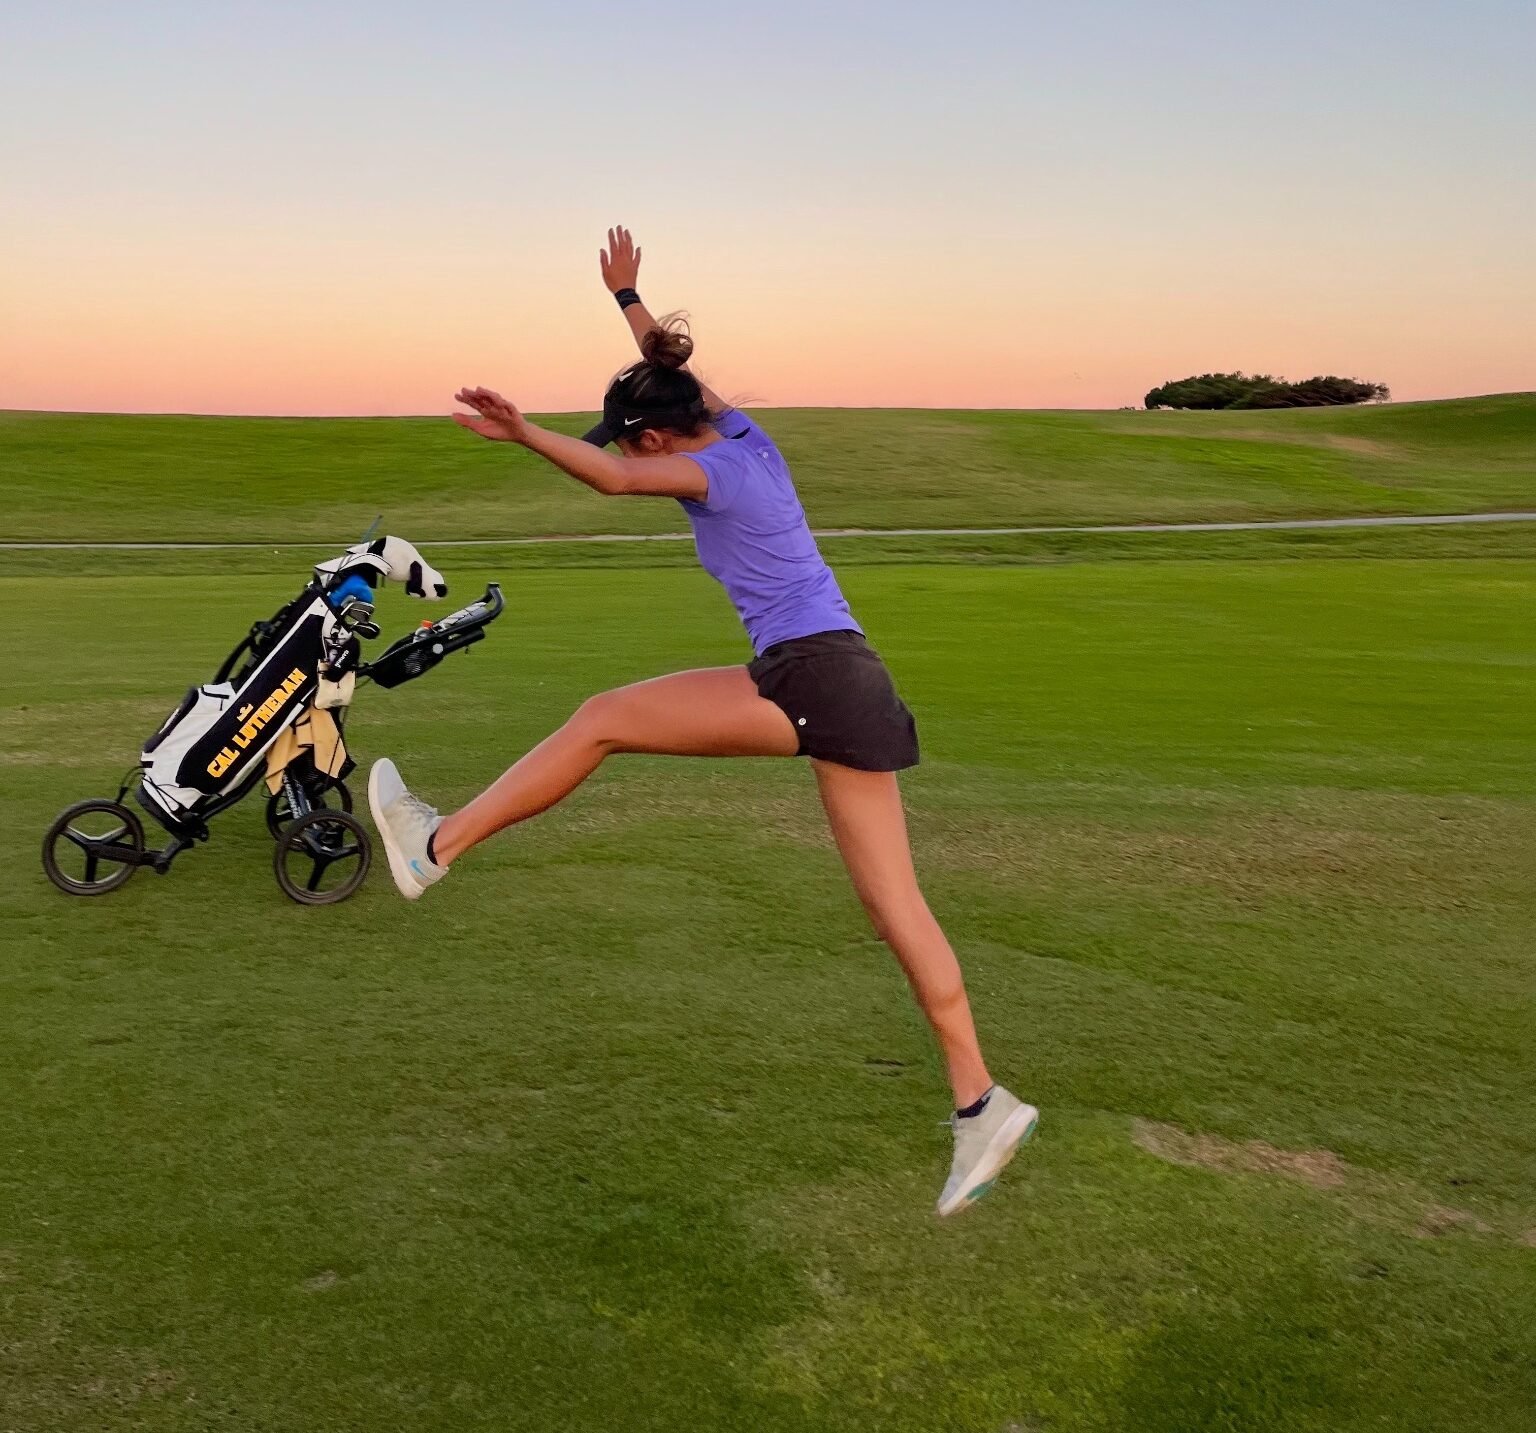 The Joy of Golf